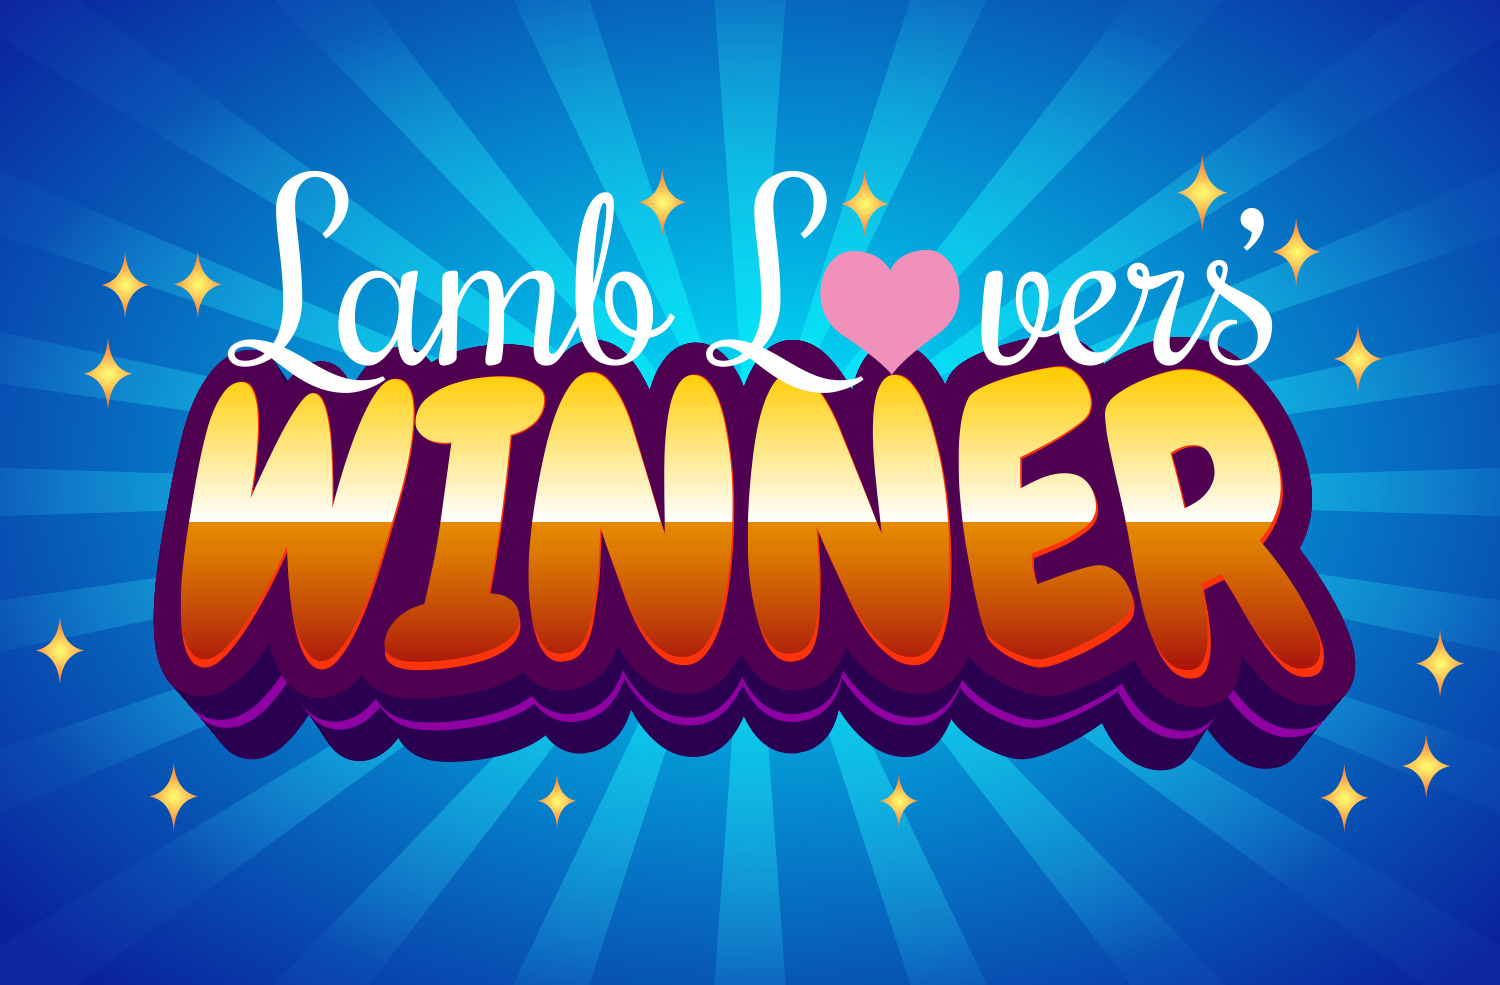 lamb lovers' winner